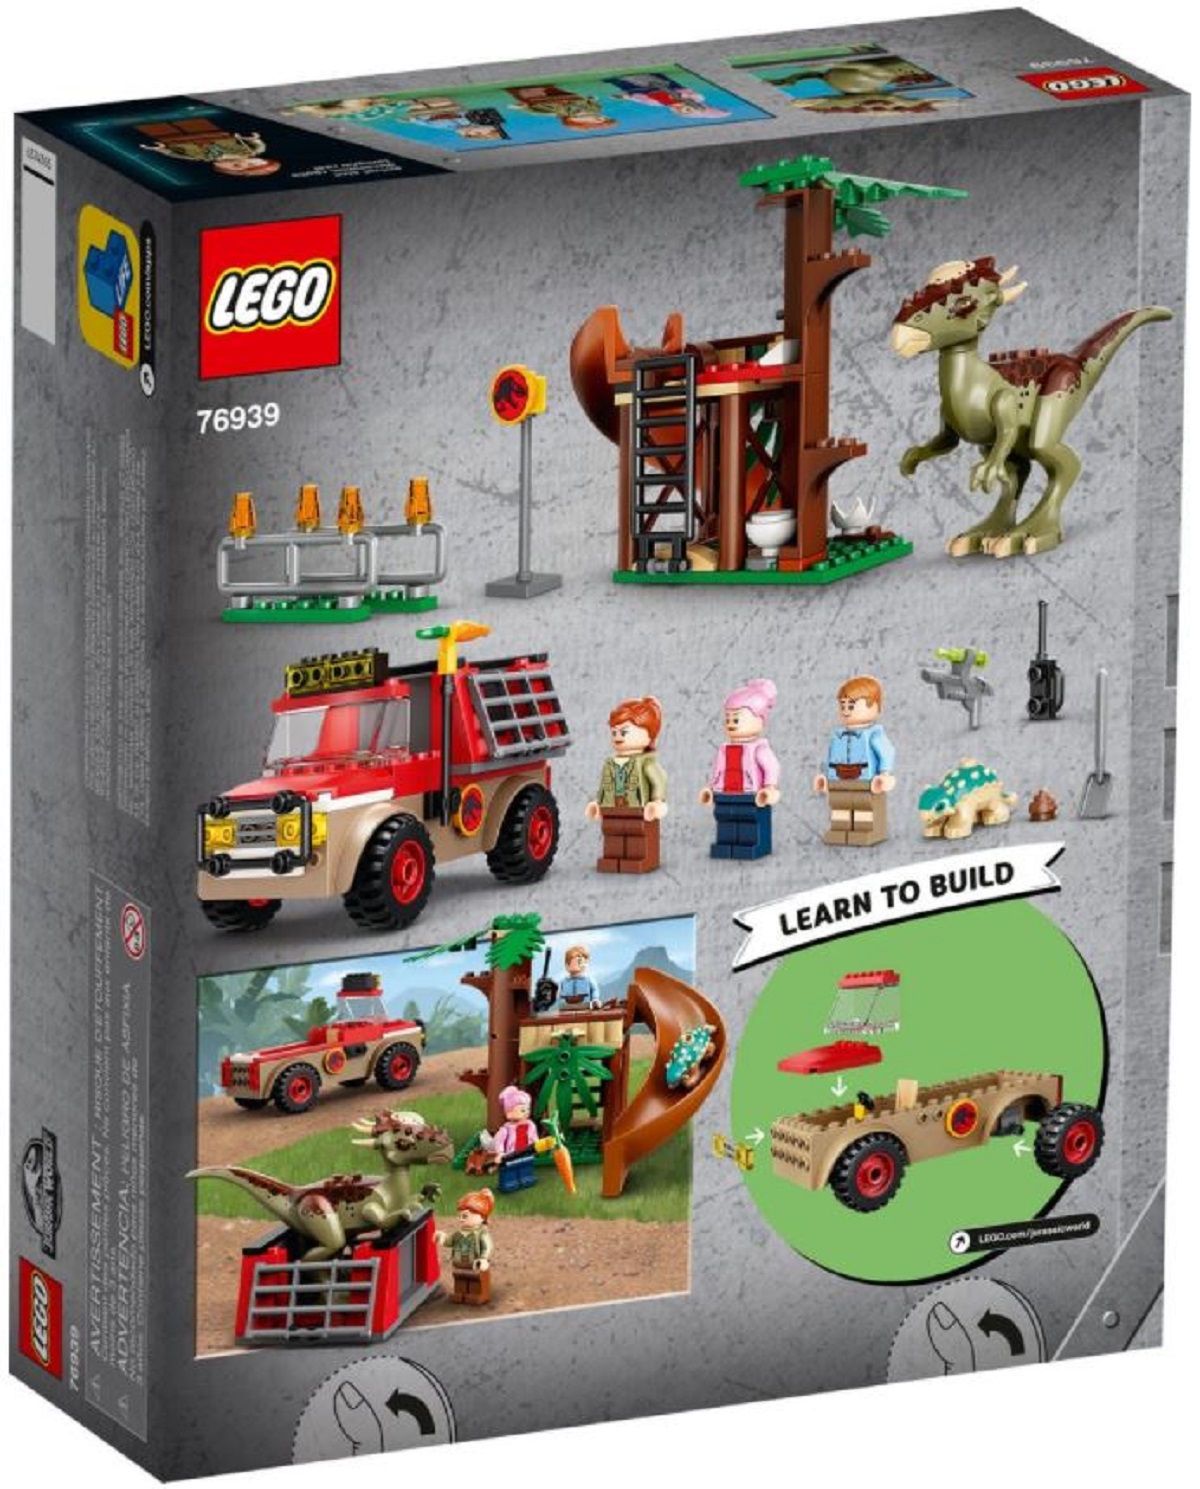 Lego Jurassic World. Evadarea dinozaurului Stygimoloch